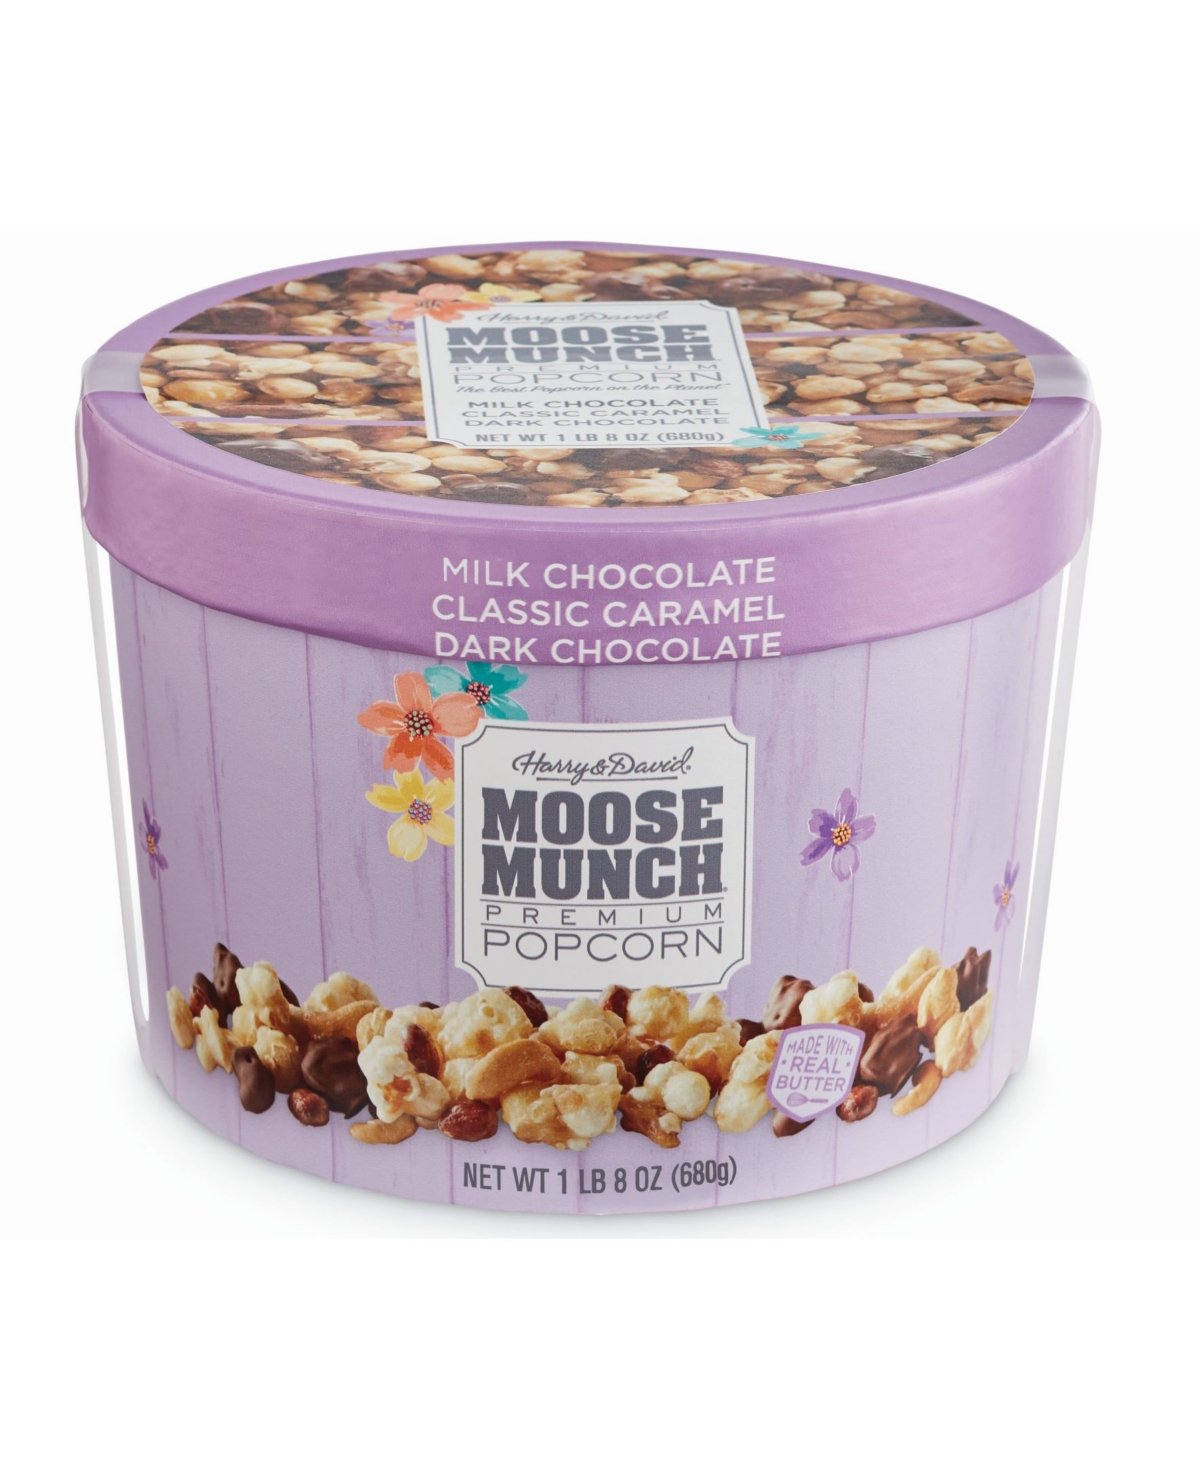 24-Oz Harry & David Spring Classic Moose Munch Popcorn Drum (Milk Chocolate/Dark Chocolate/Caramel) $12 + Free Store Pickup at Macy's or FS on $25+